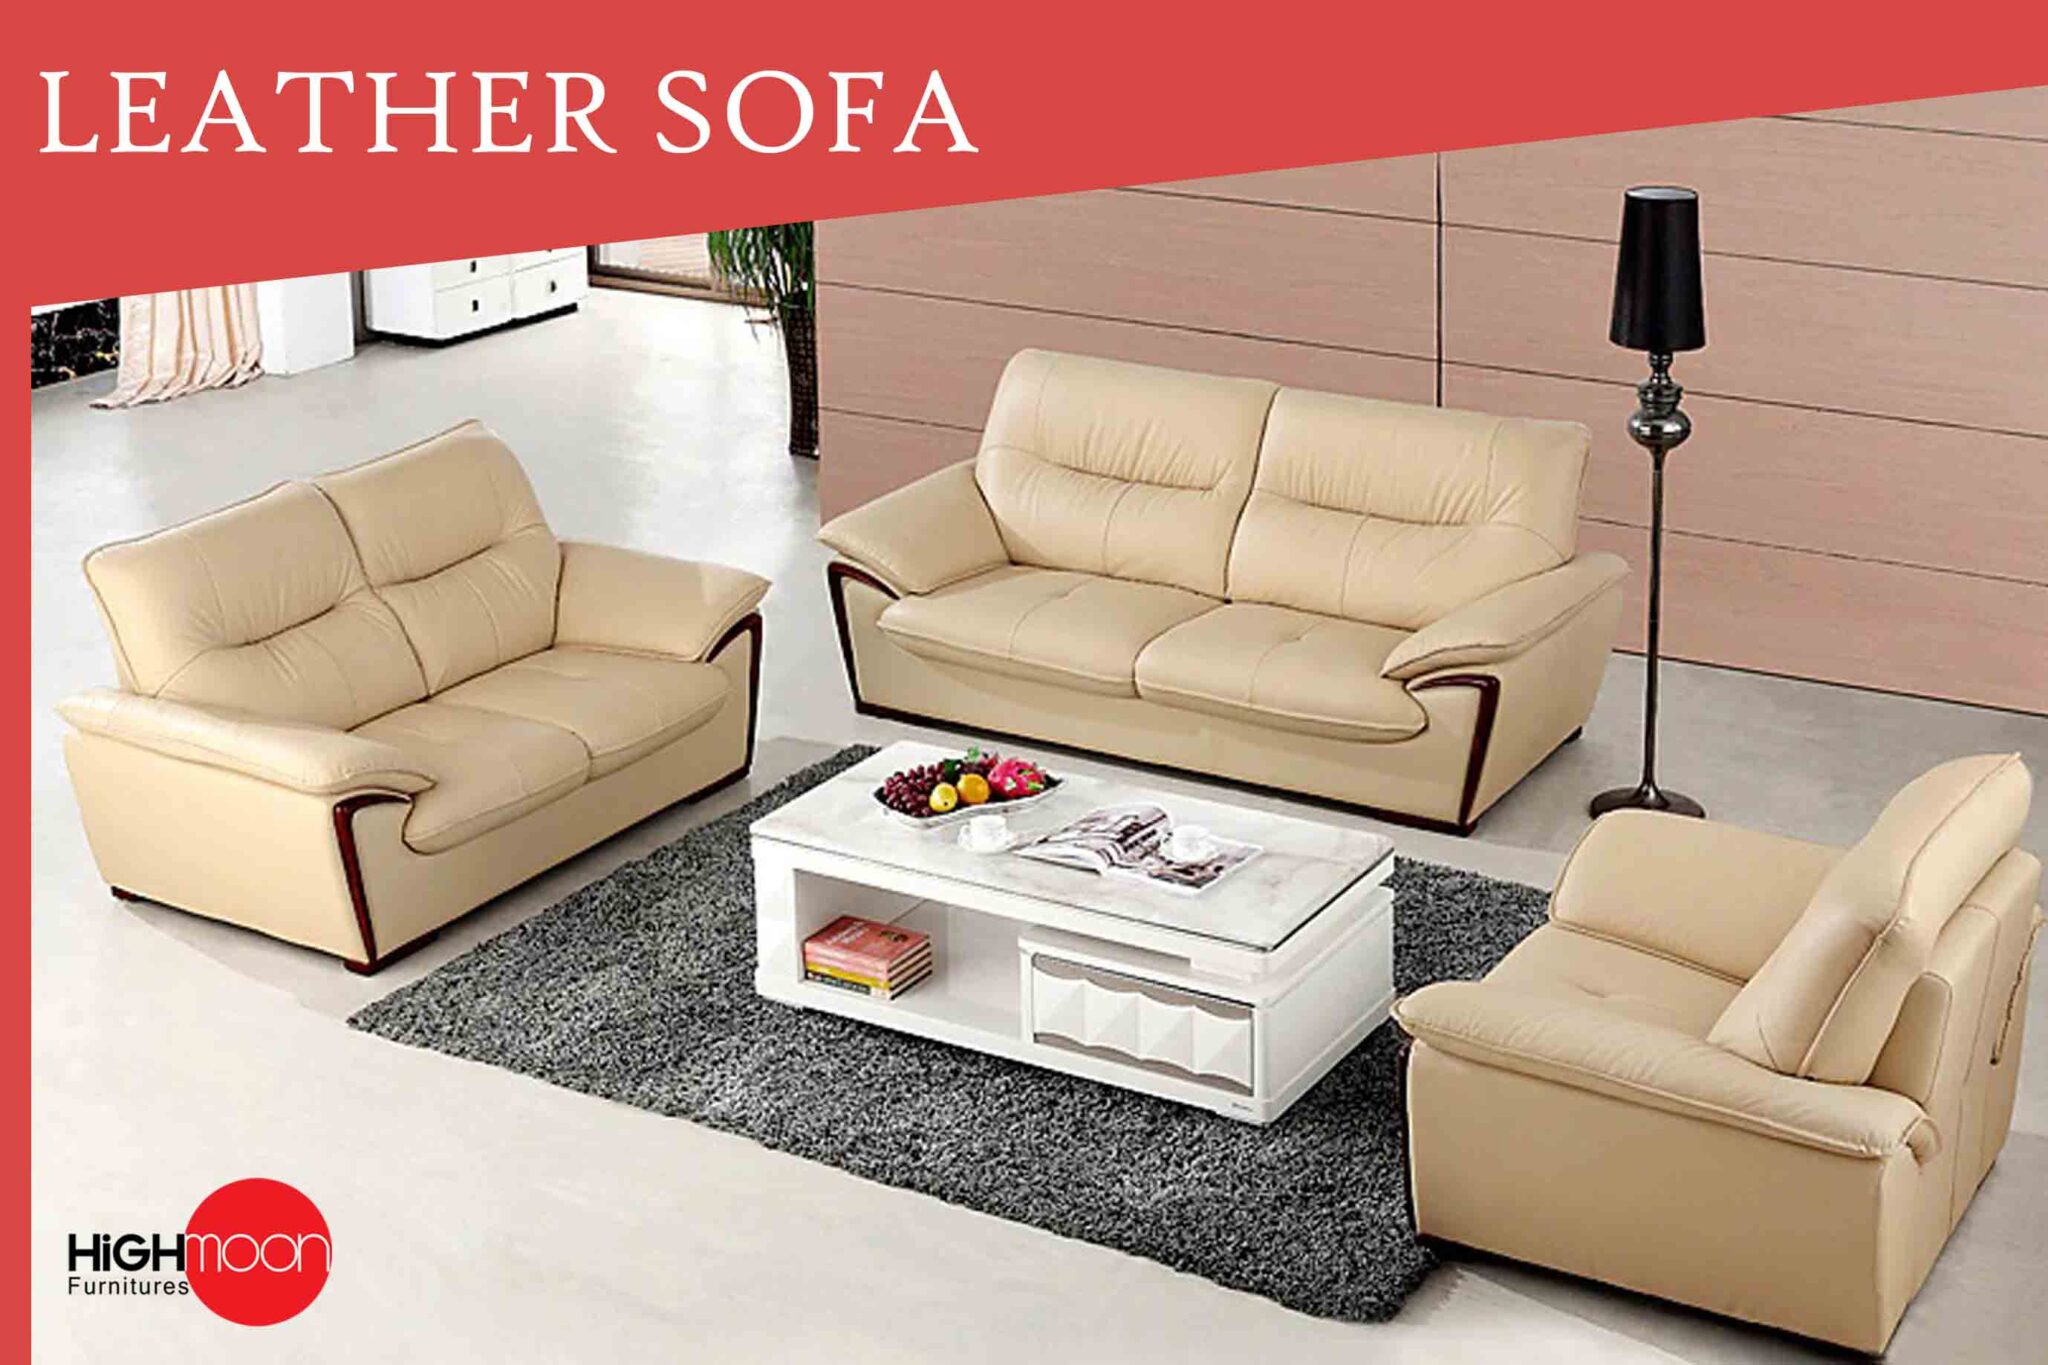 leather sofa repair dubai